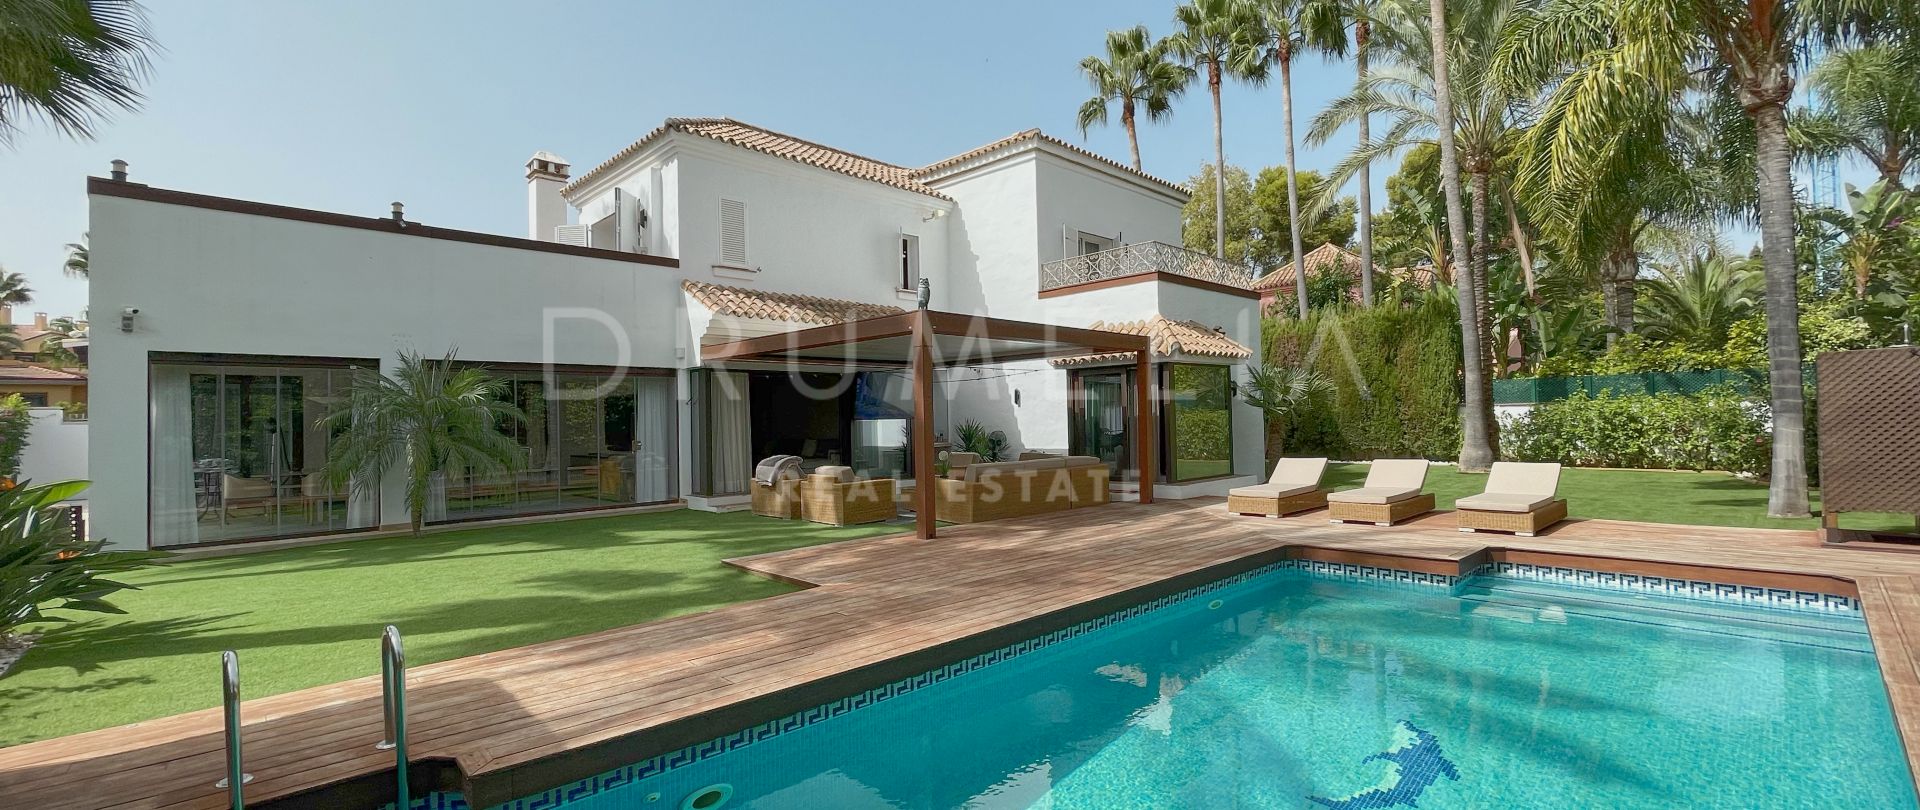 Beautiful Andalusian-style luxury villa in Las Mimosas, Puerto Banus, Marbella